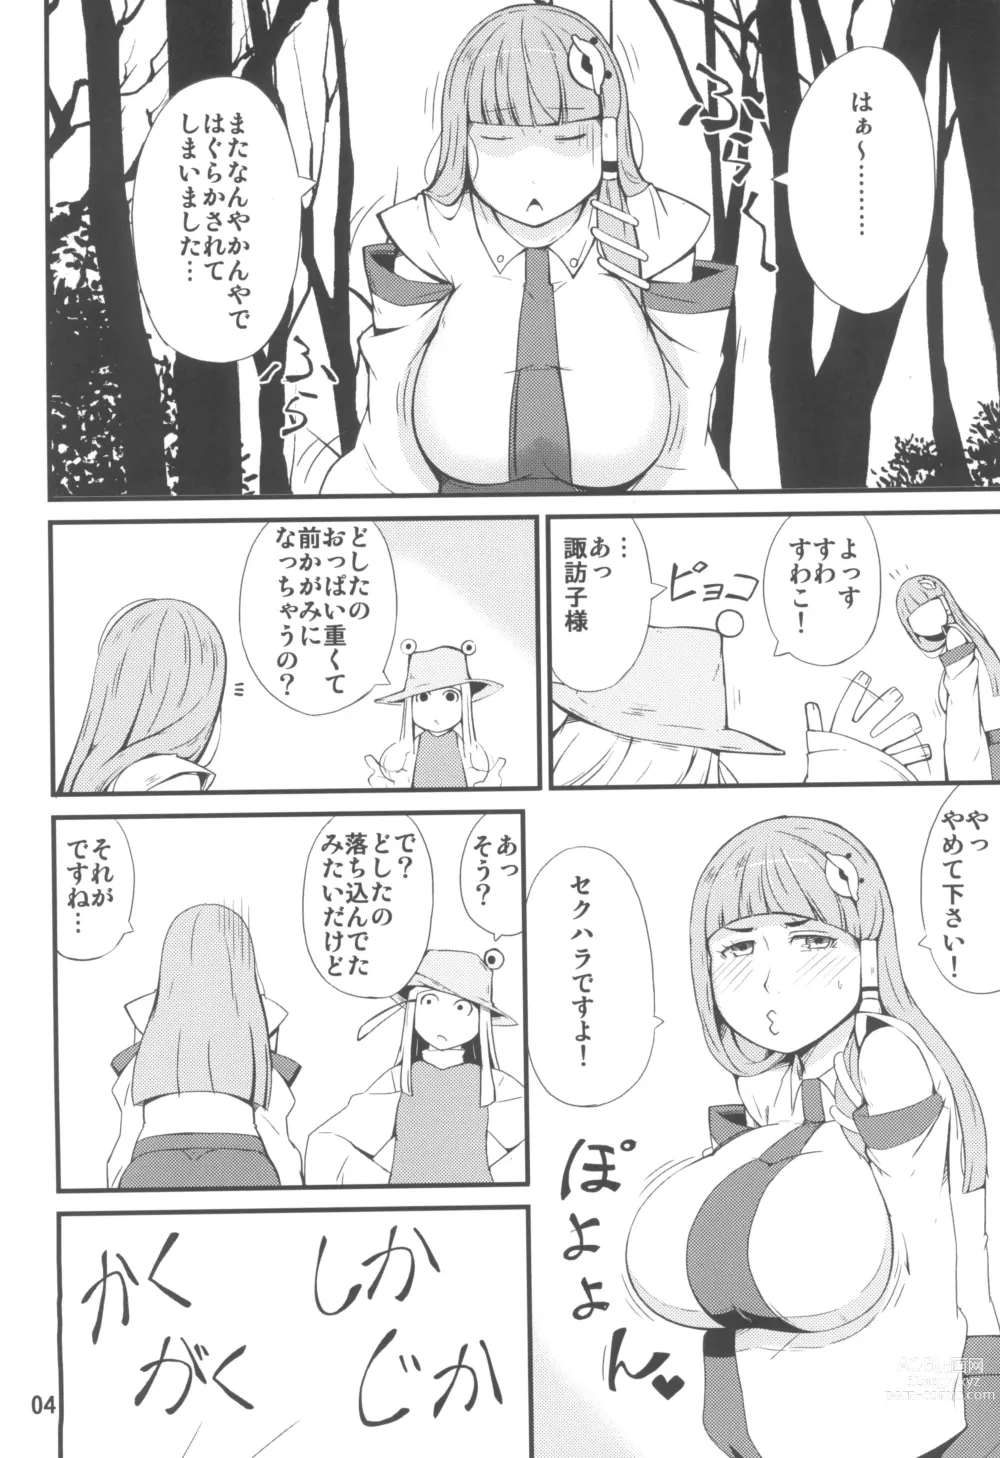 Page 4 of doujinshi Kamisama LESSON